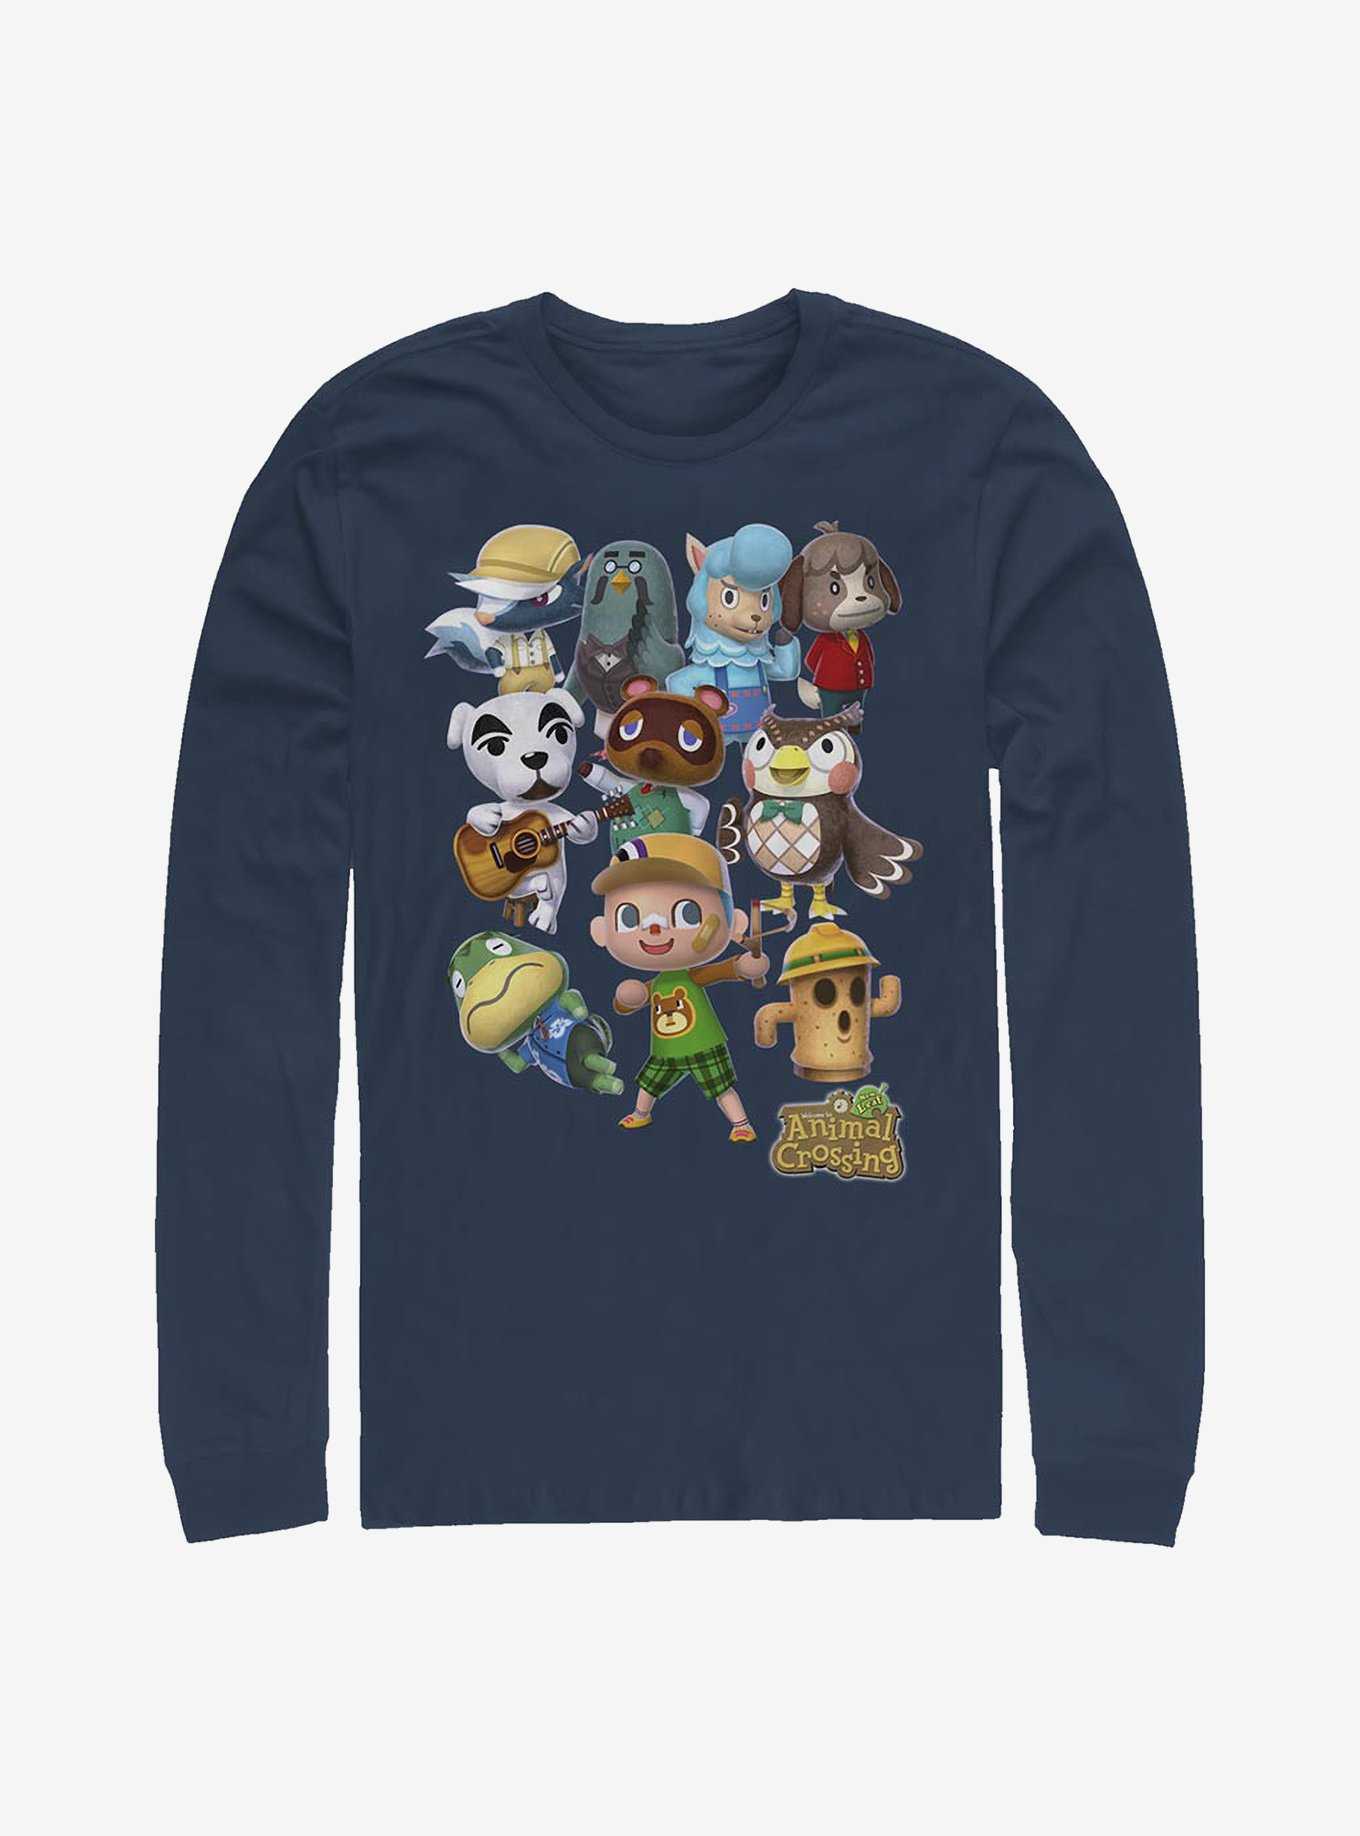 Nintendo Animal Crossing Welcome Long-Sleeve T-Shirt, , hi-res